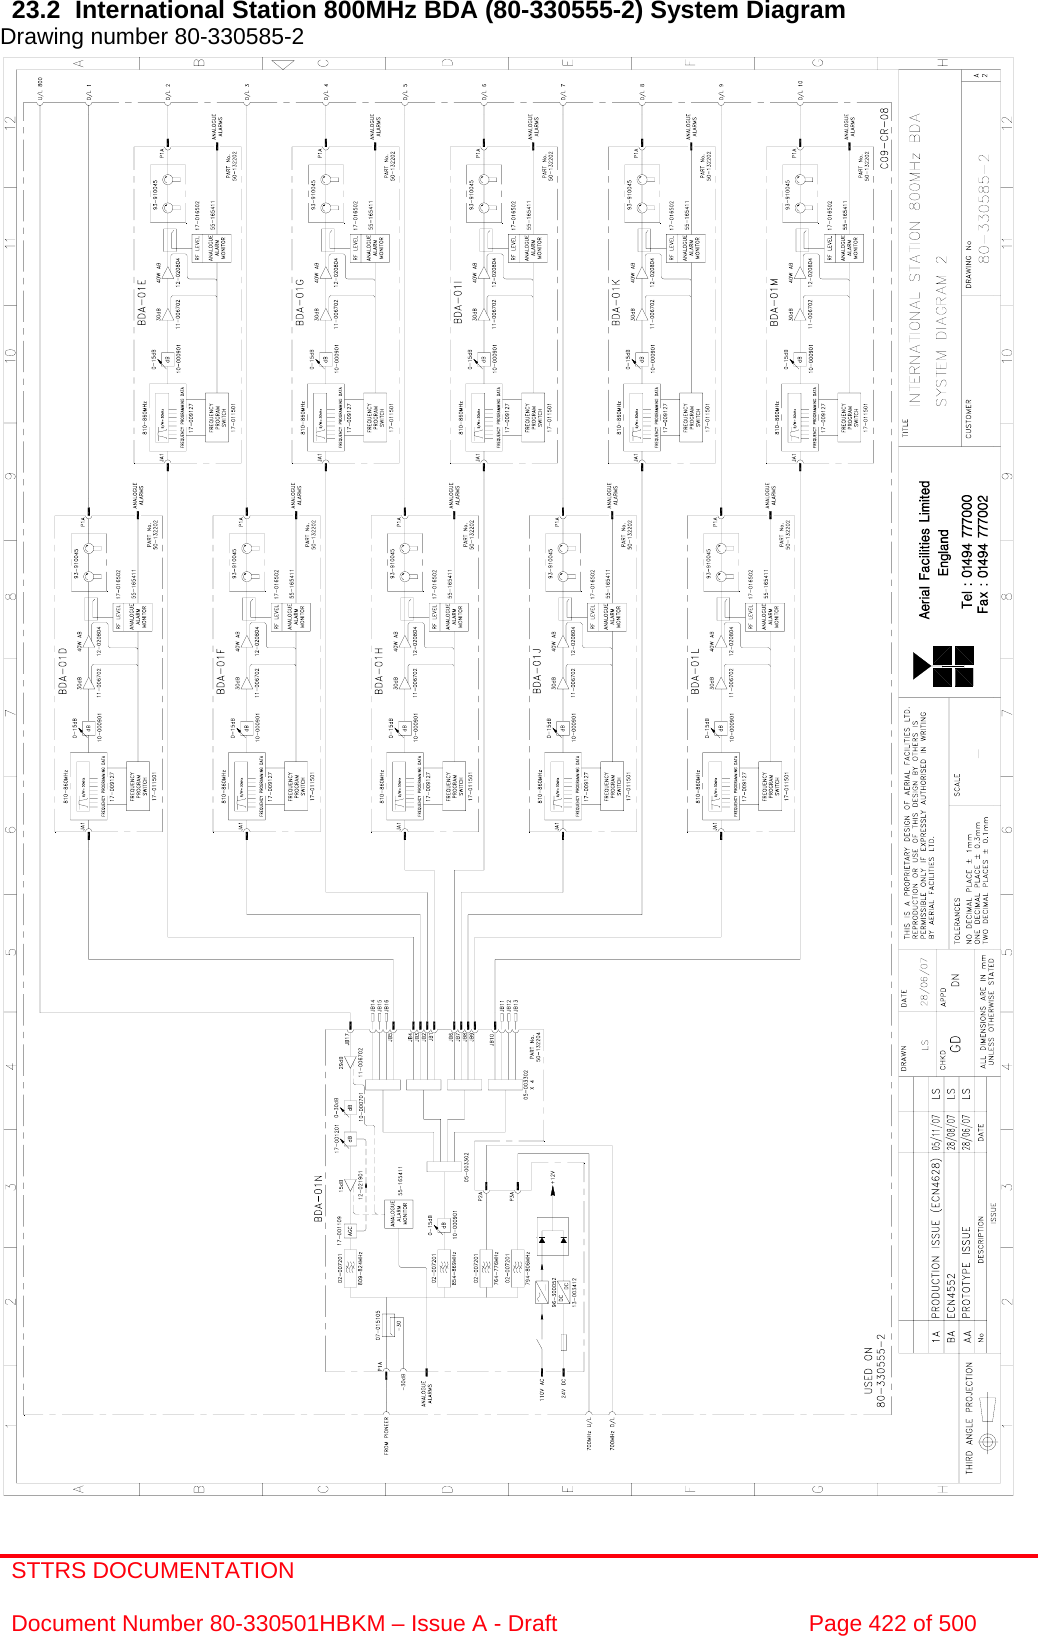 STTRS DOCUMENTATION  Document Number 80-330501HBKM – Issue A - Draft  Page 422 of 500   23.2  International Station 800MHz BDA (80-330555-2) System Diagram Drawing number 80-330585-2                                                       